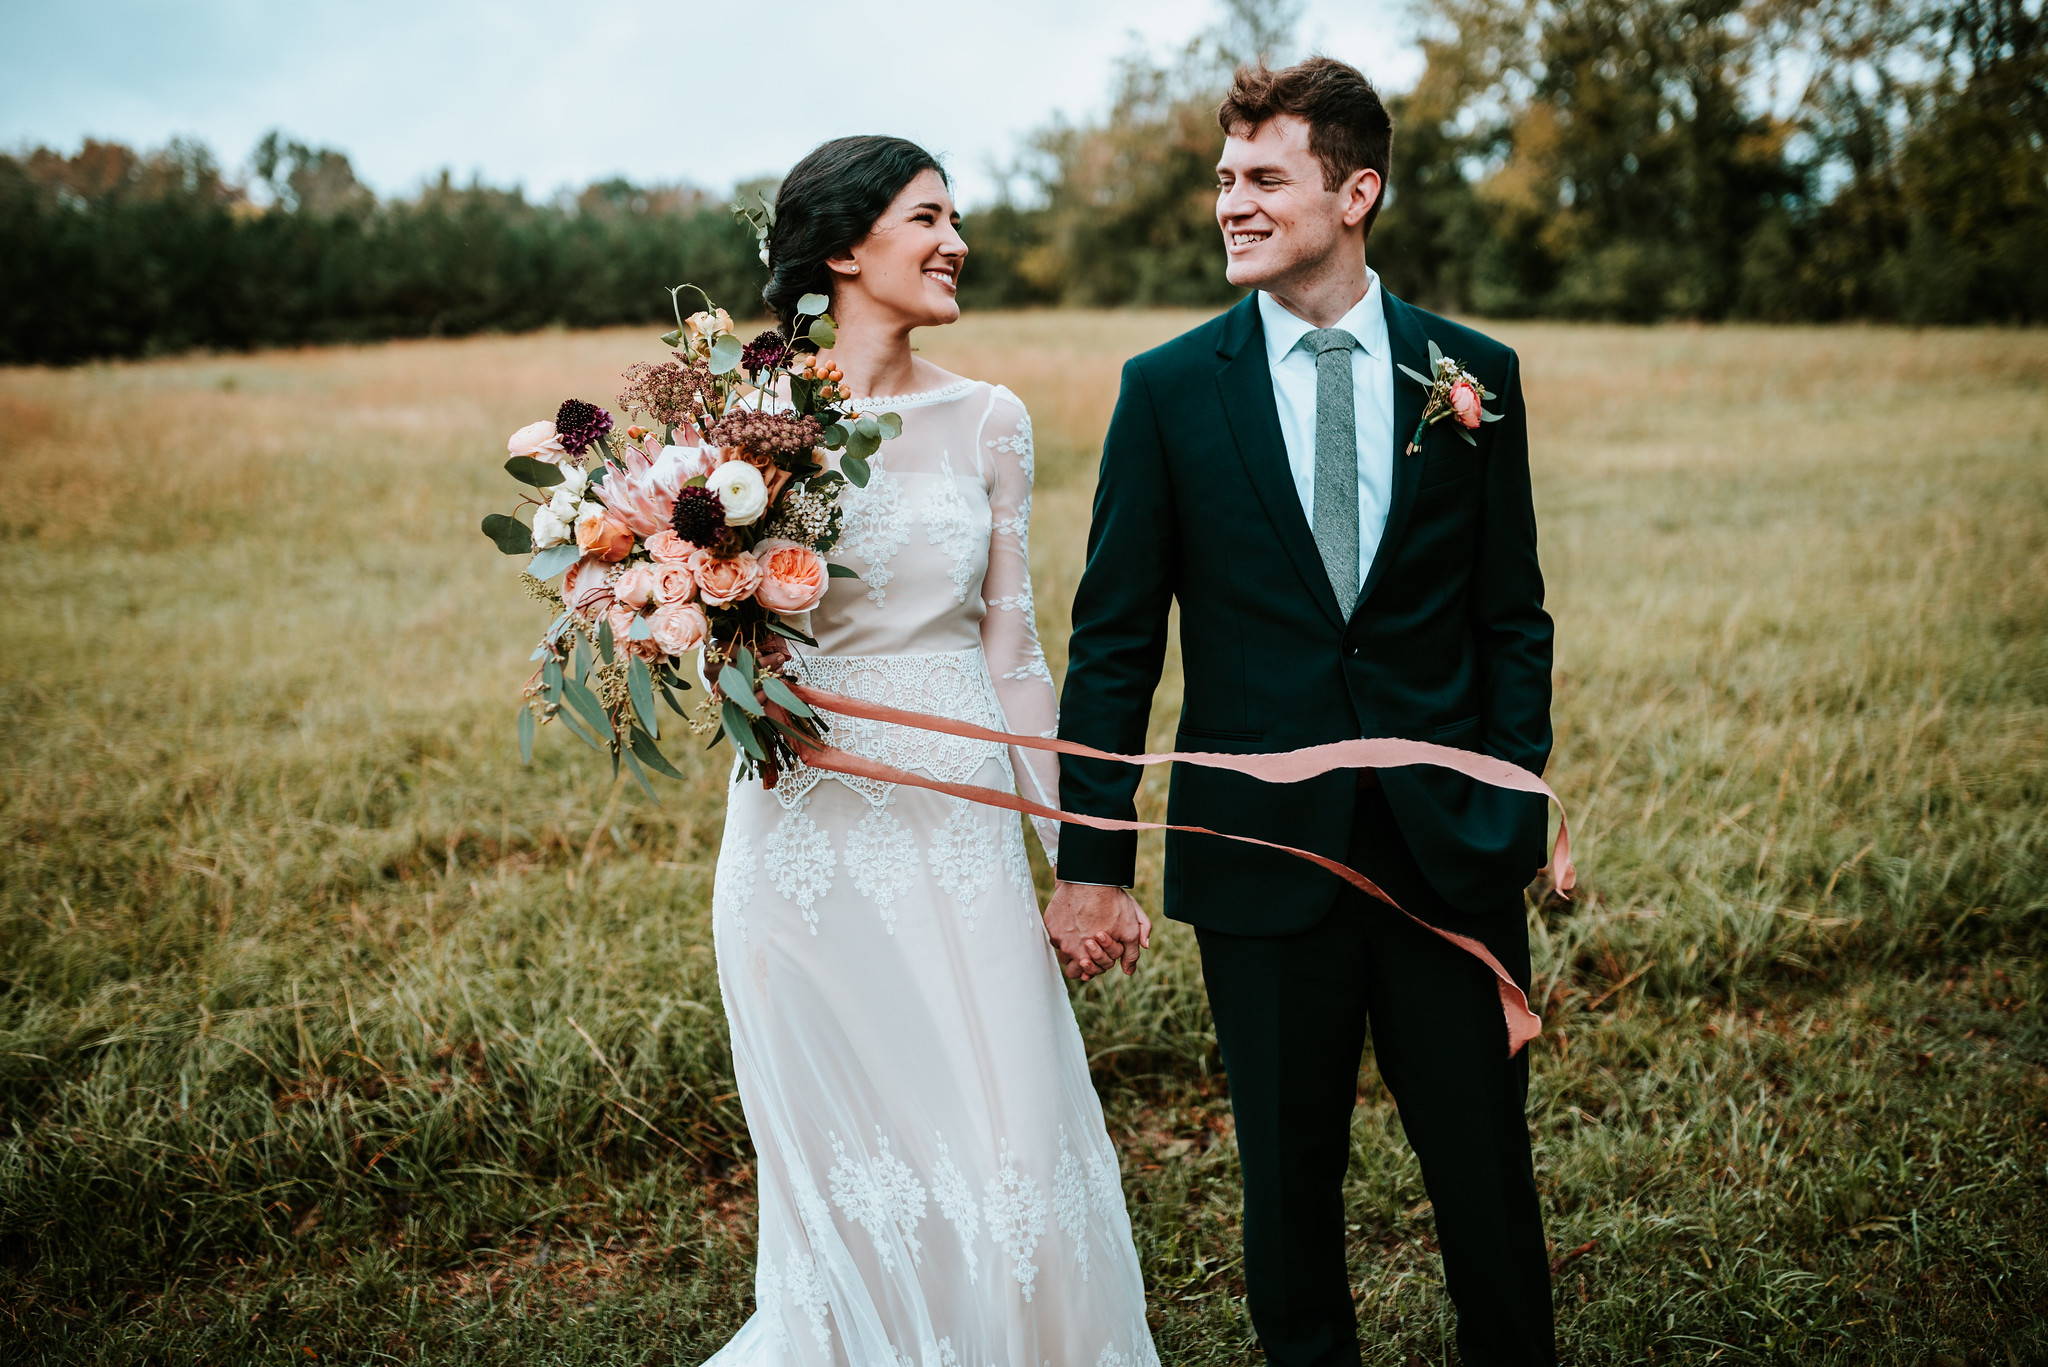 DIY wedding flowers for DIY brides